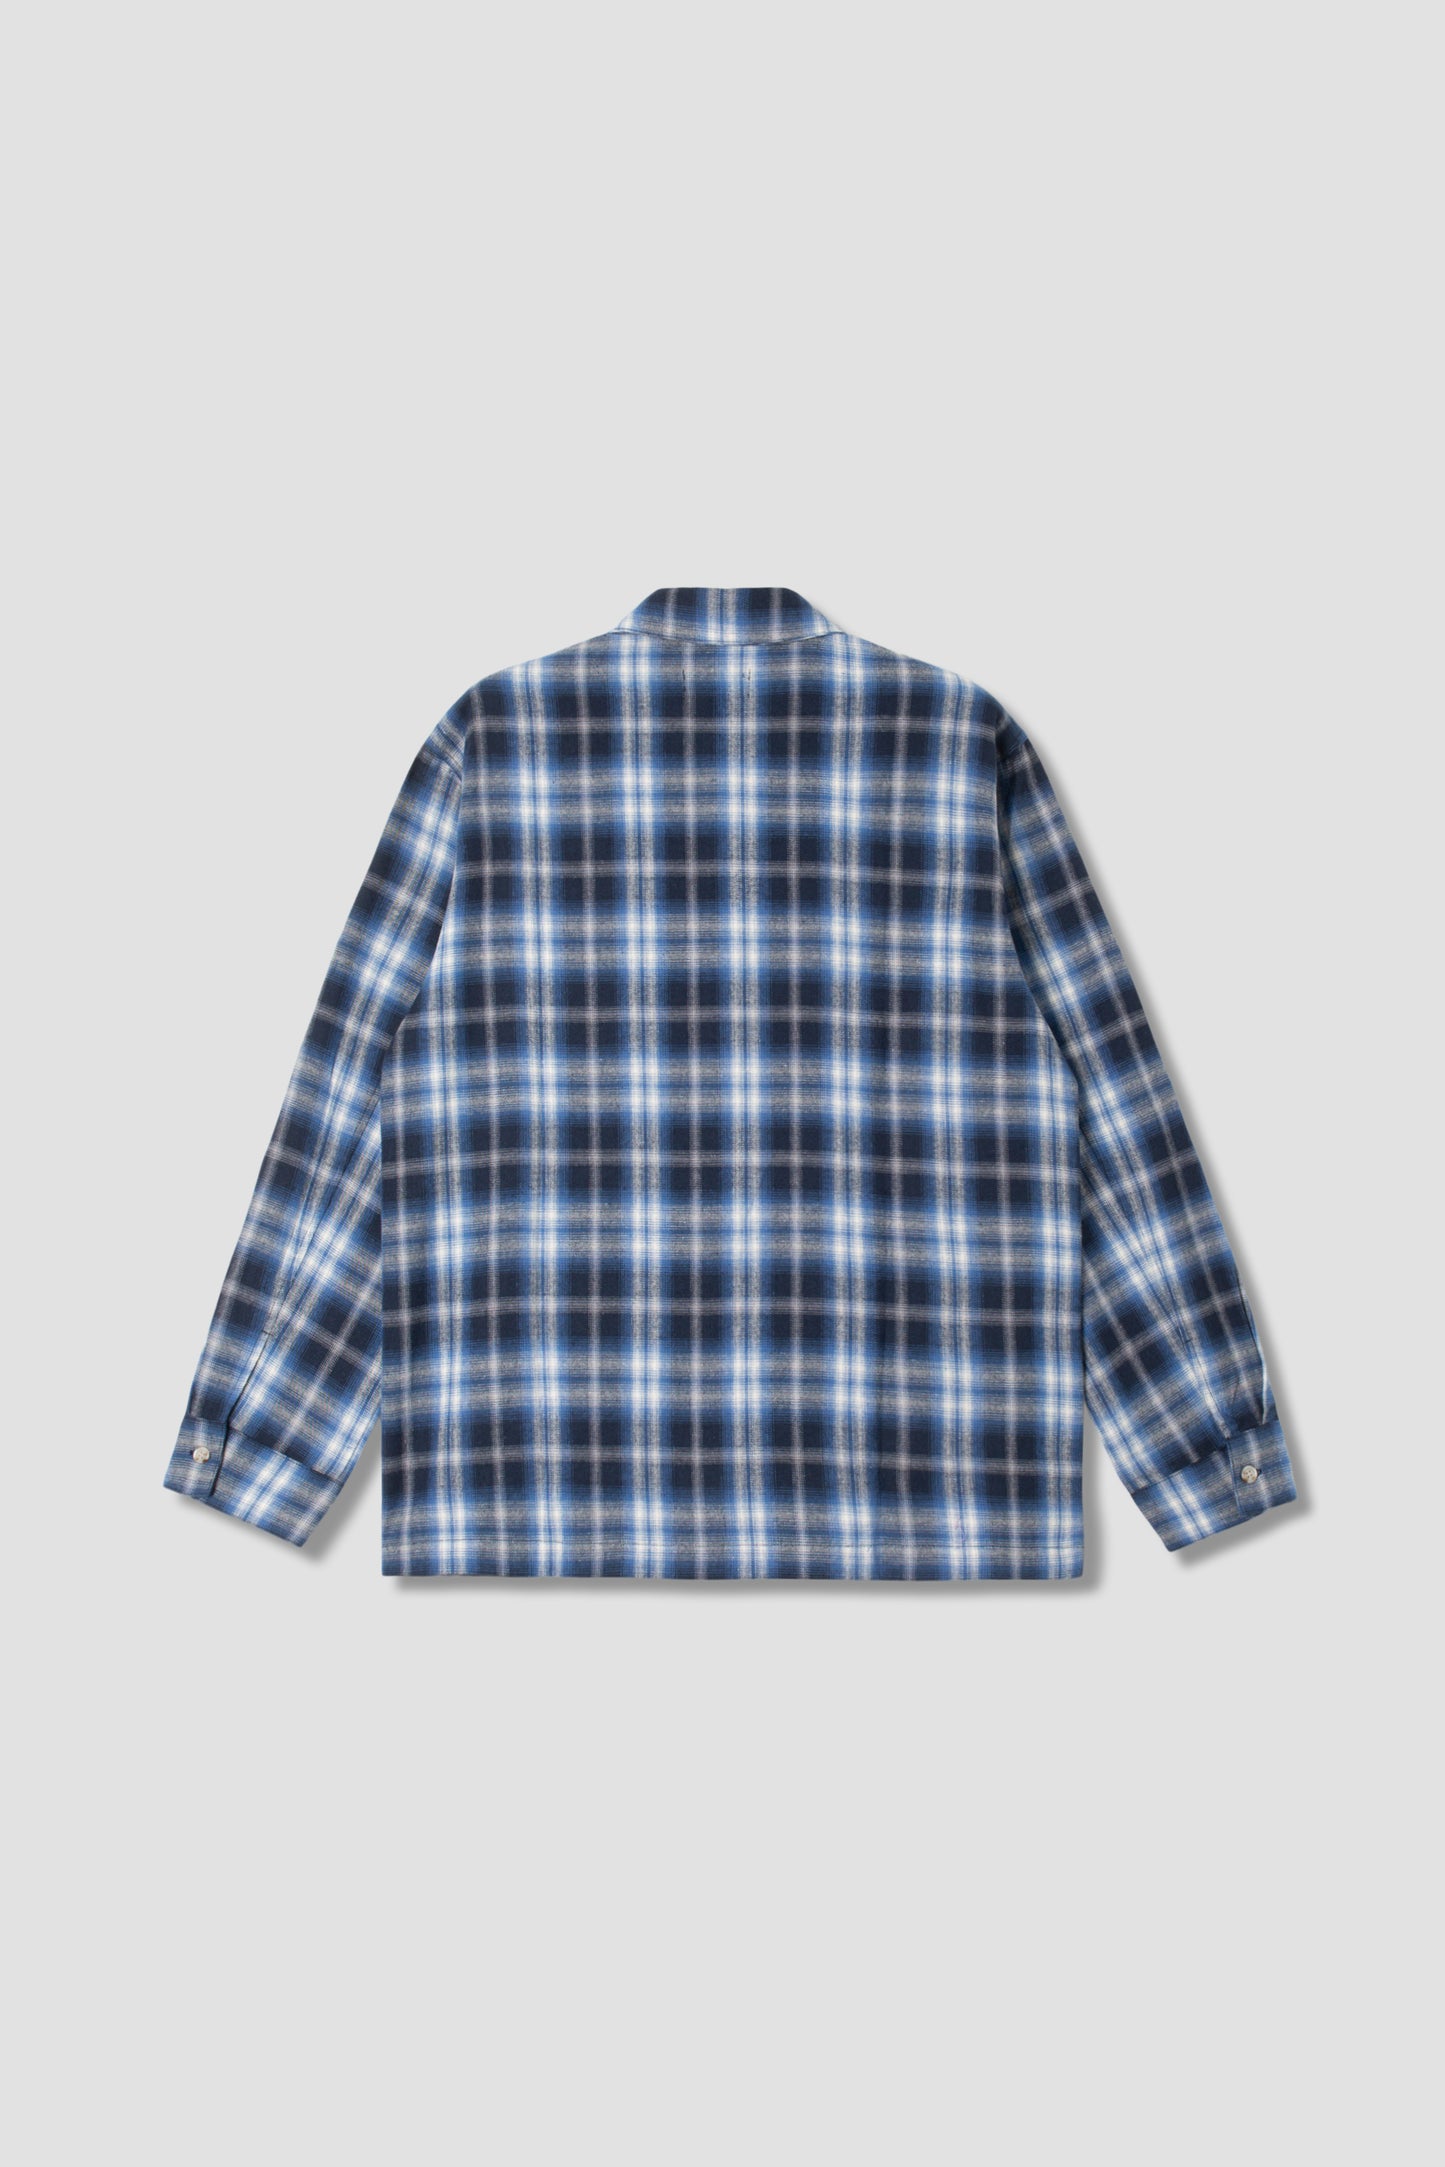 Flannel Shirt (Navy) Plaid